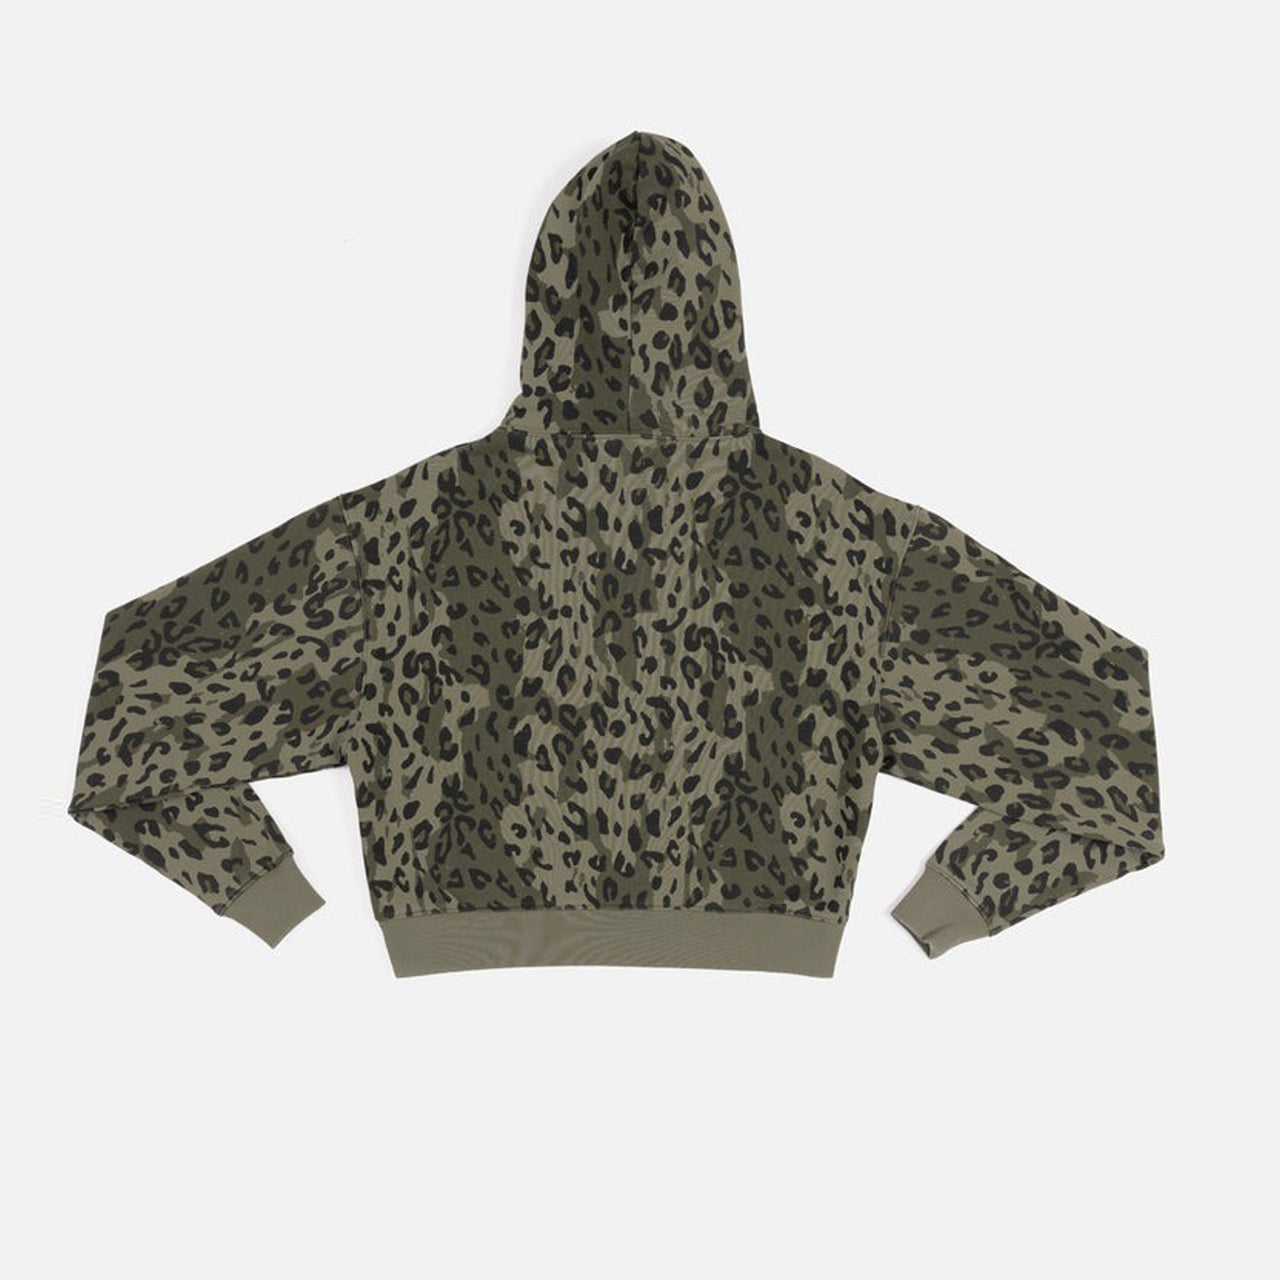 Patta Femme Leopard Cropped Hooded Sweater - Dusty Olive